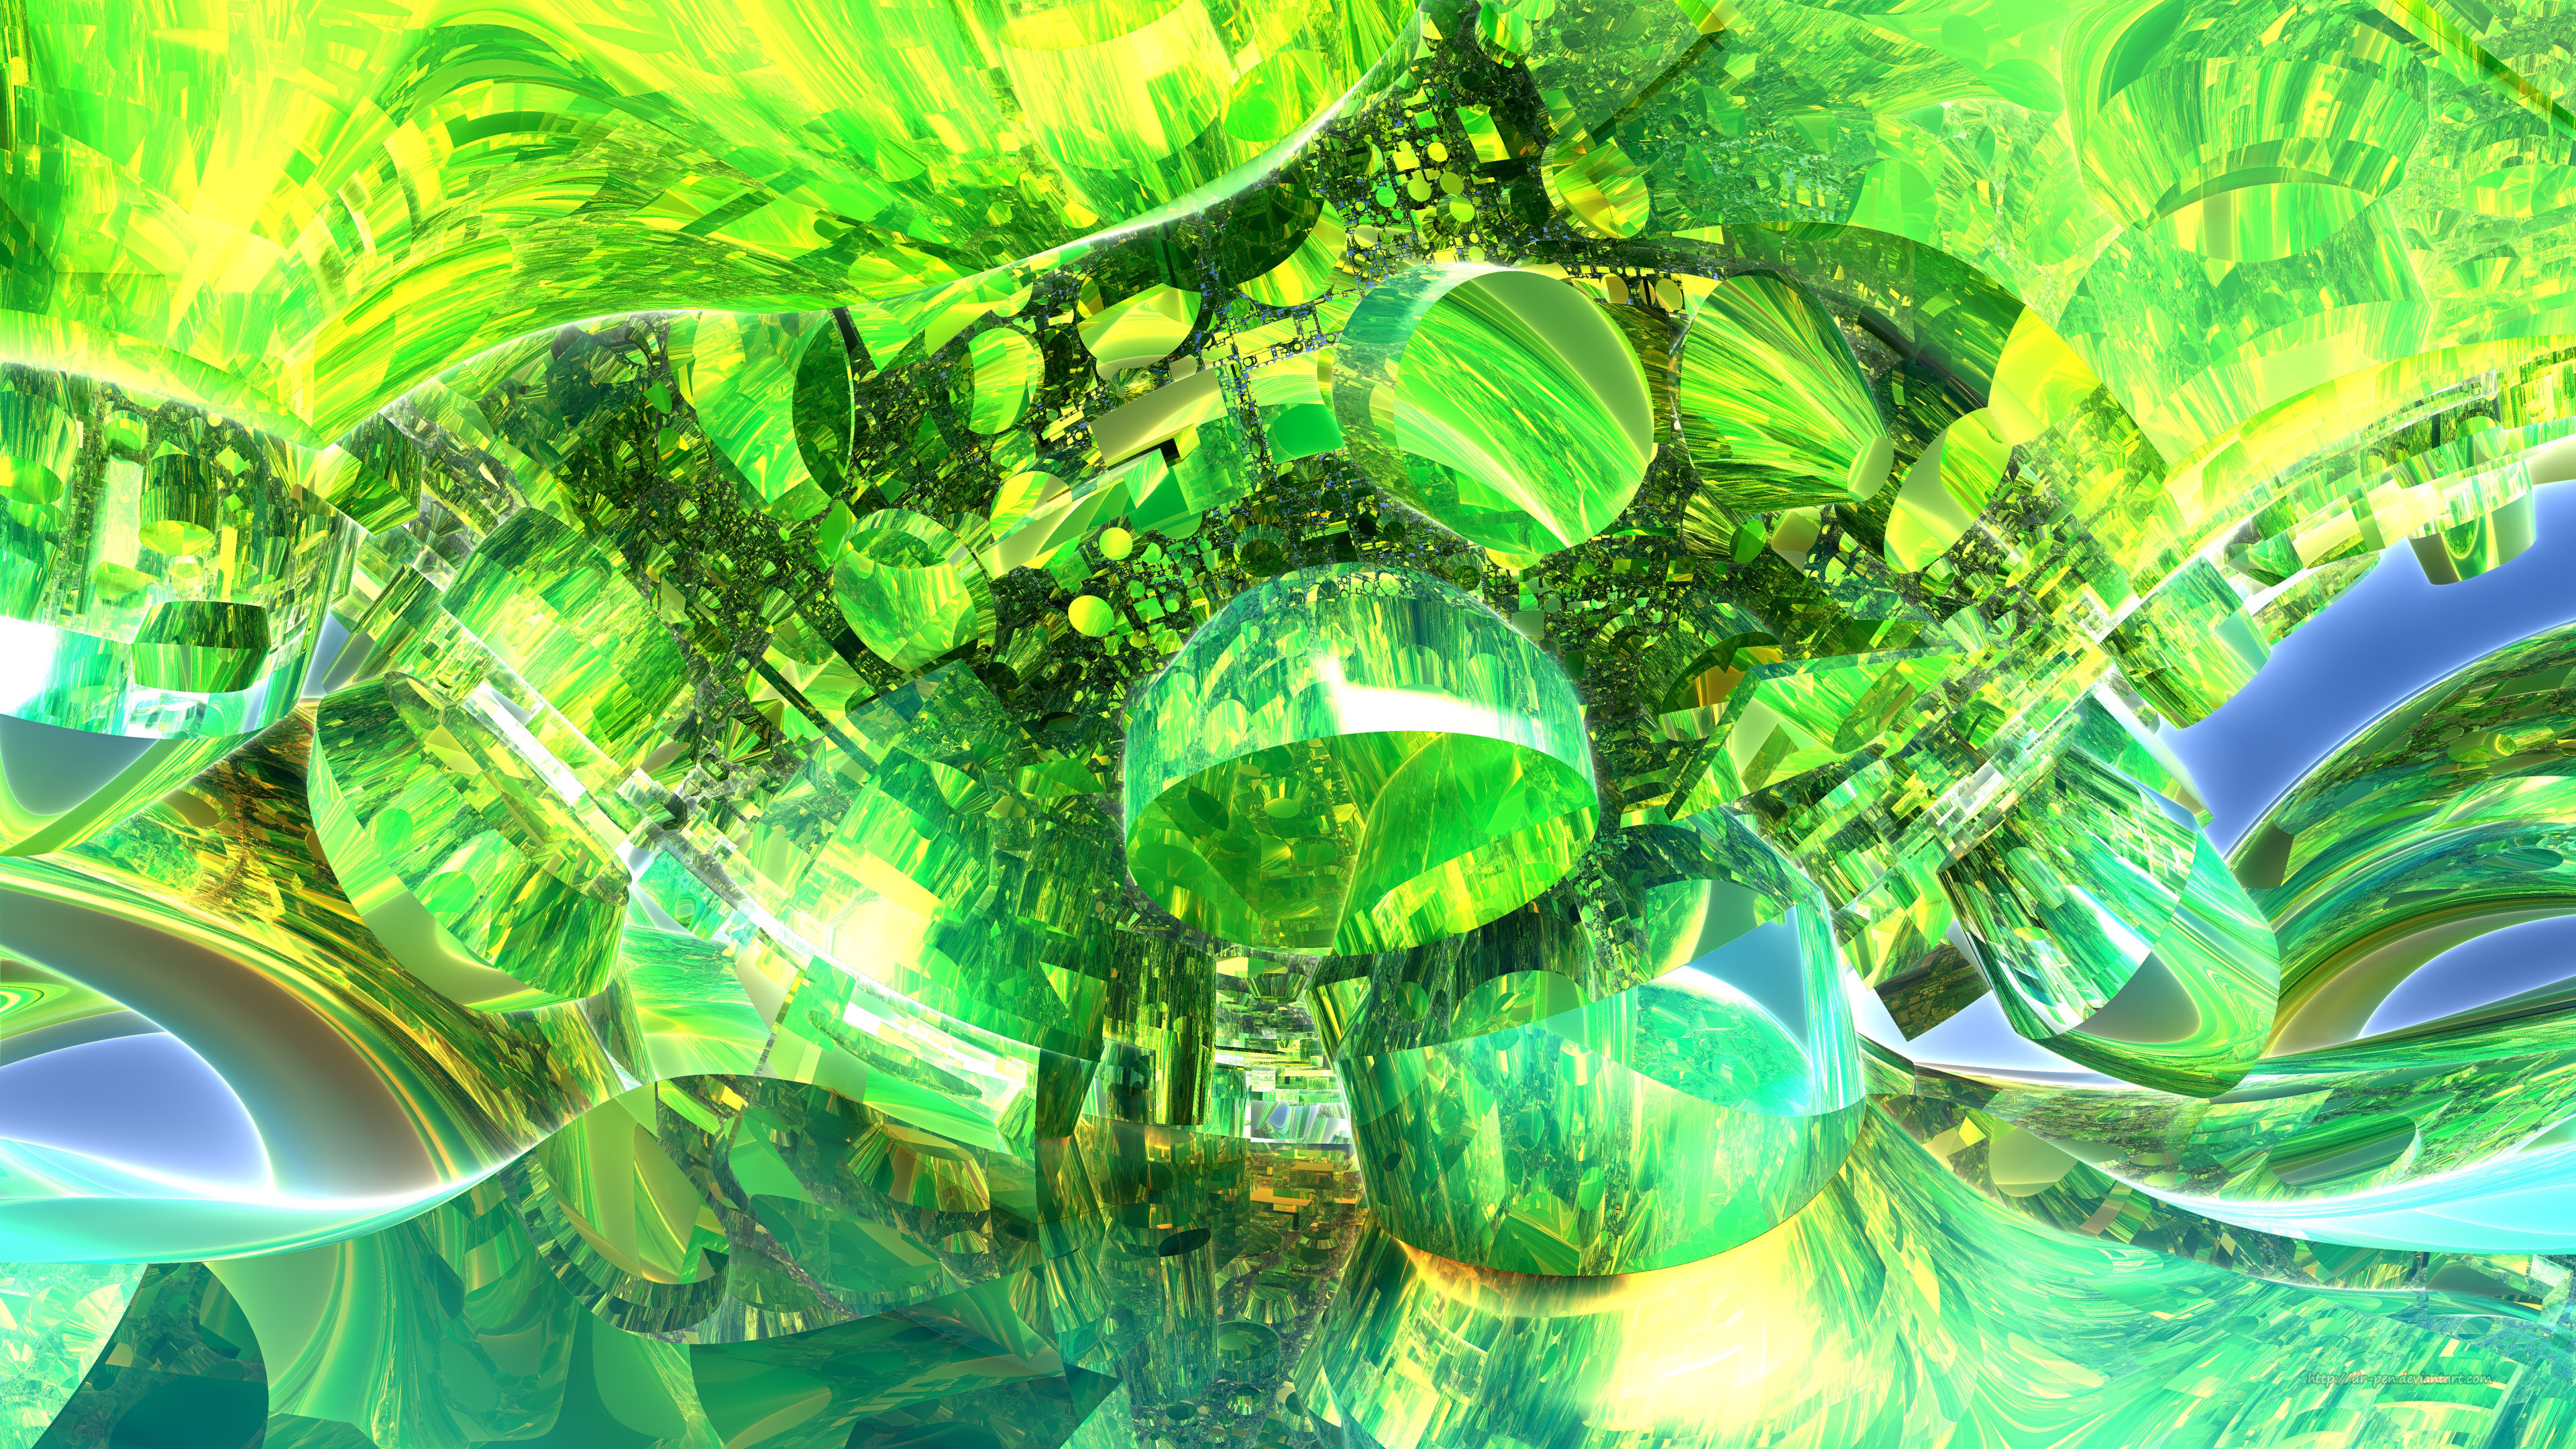 3840x2160 Emerald Splash - 3d Fractal Art 4k Ultra HD Wallpaper | Hintergrund |   | ID:834061 - Wallpaper Abyss